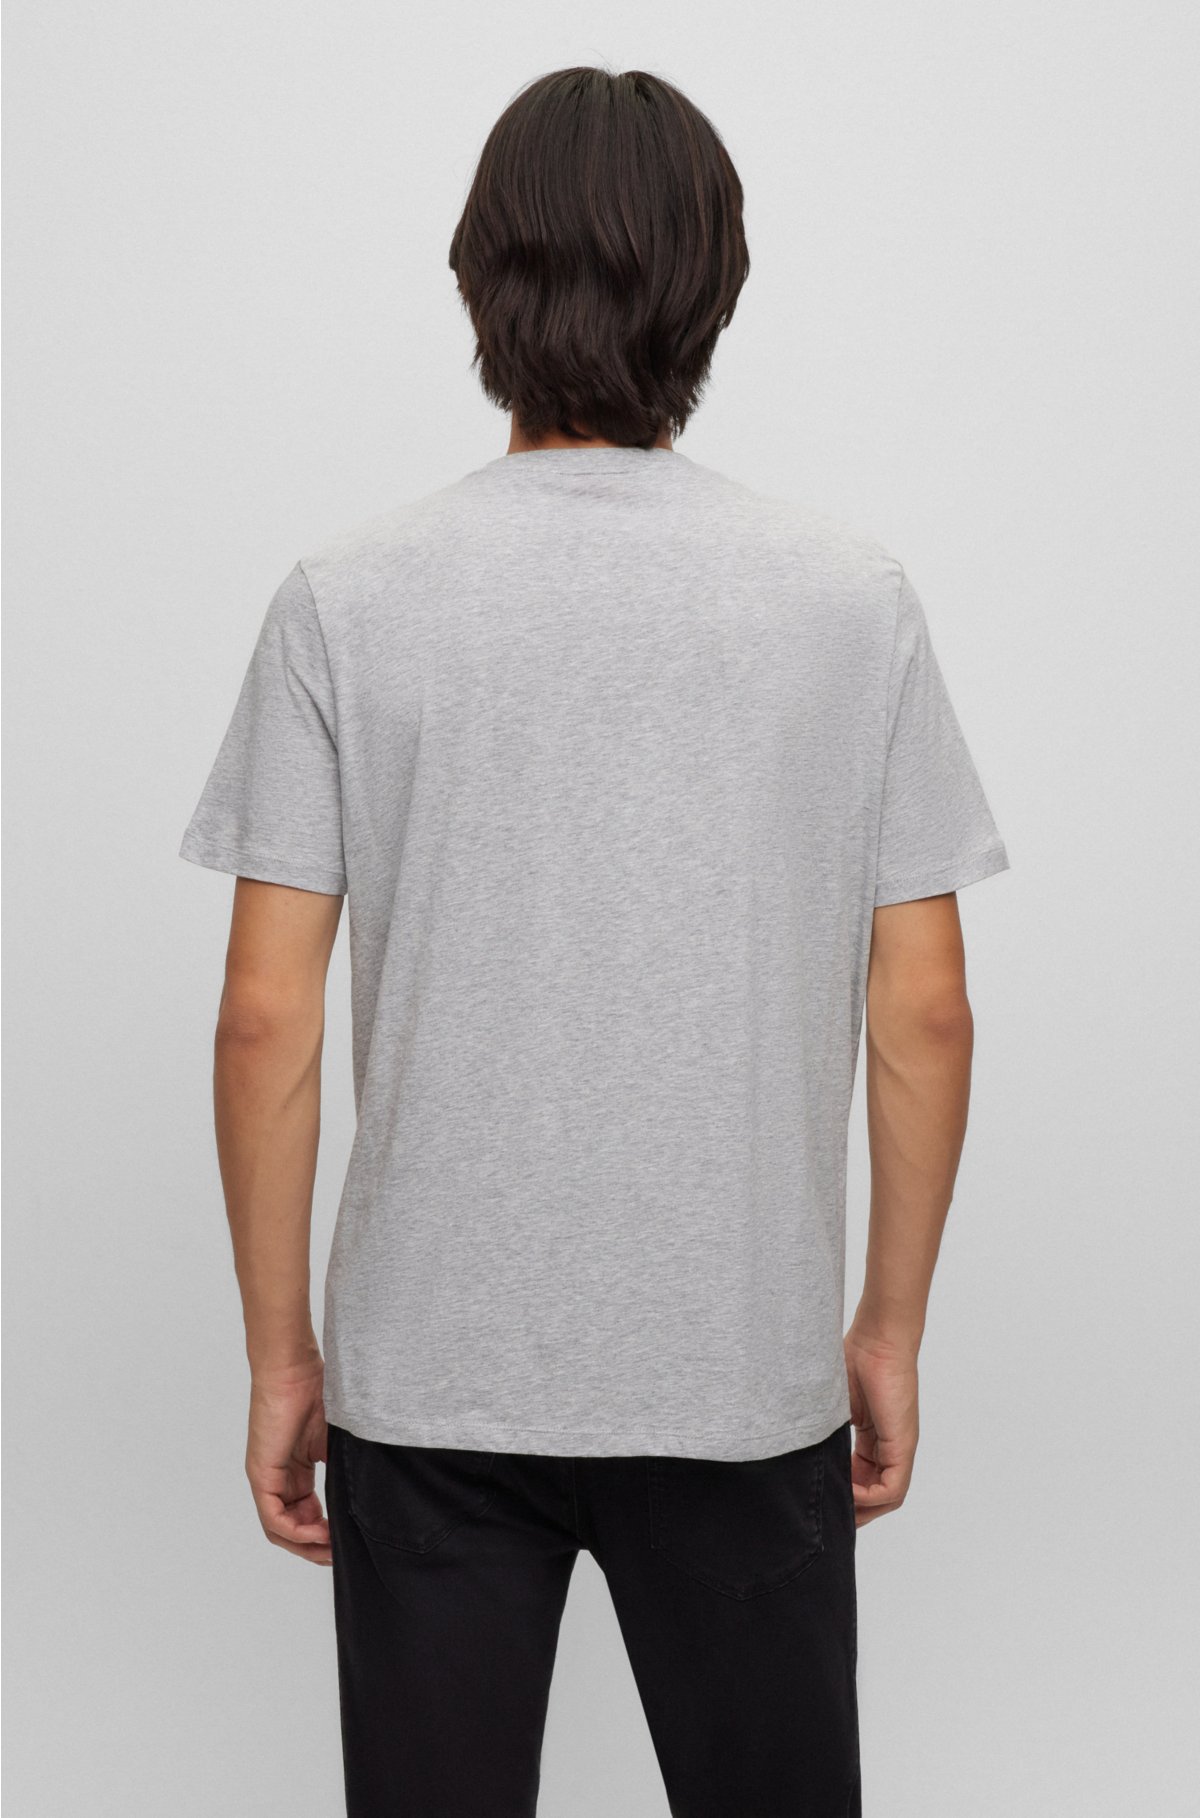 HUGO - Cotton-jersey regular-fit T-shirt with contrast logo